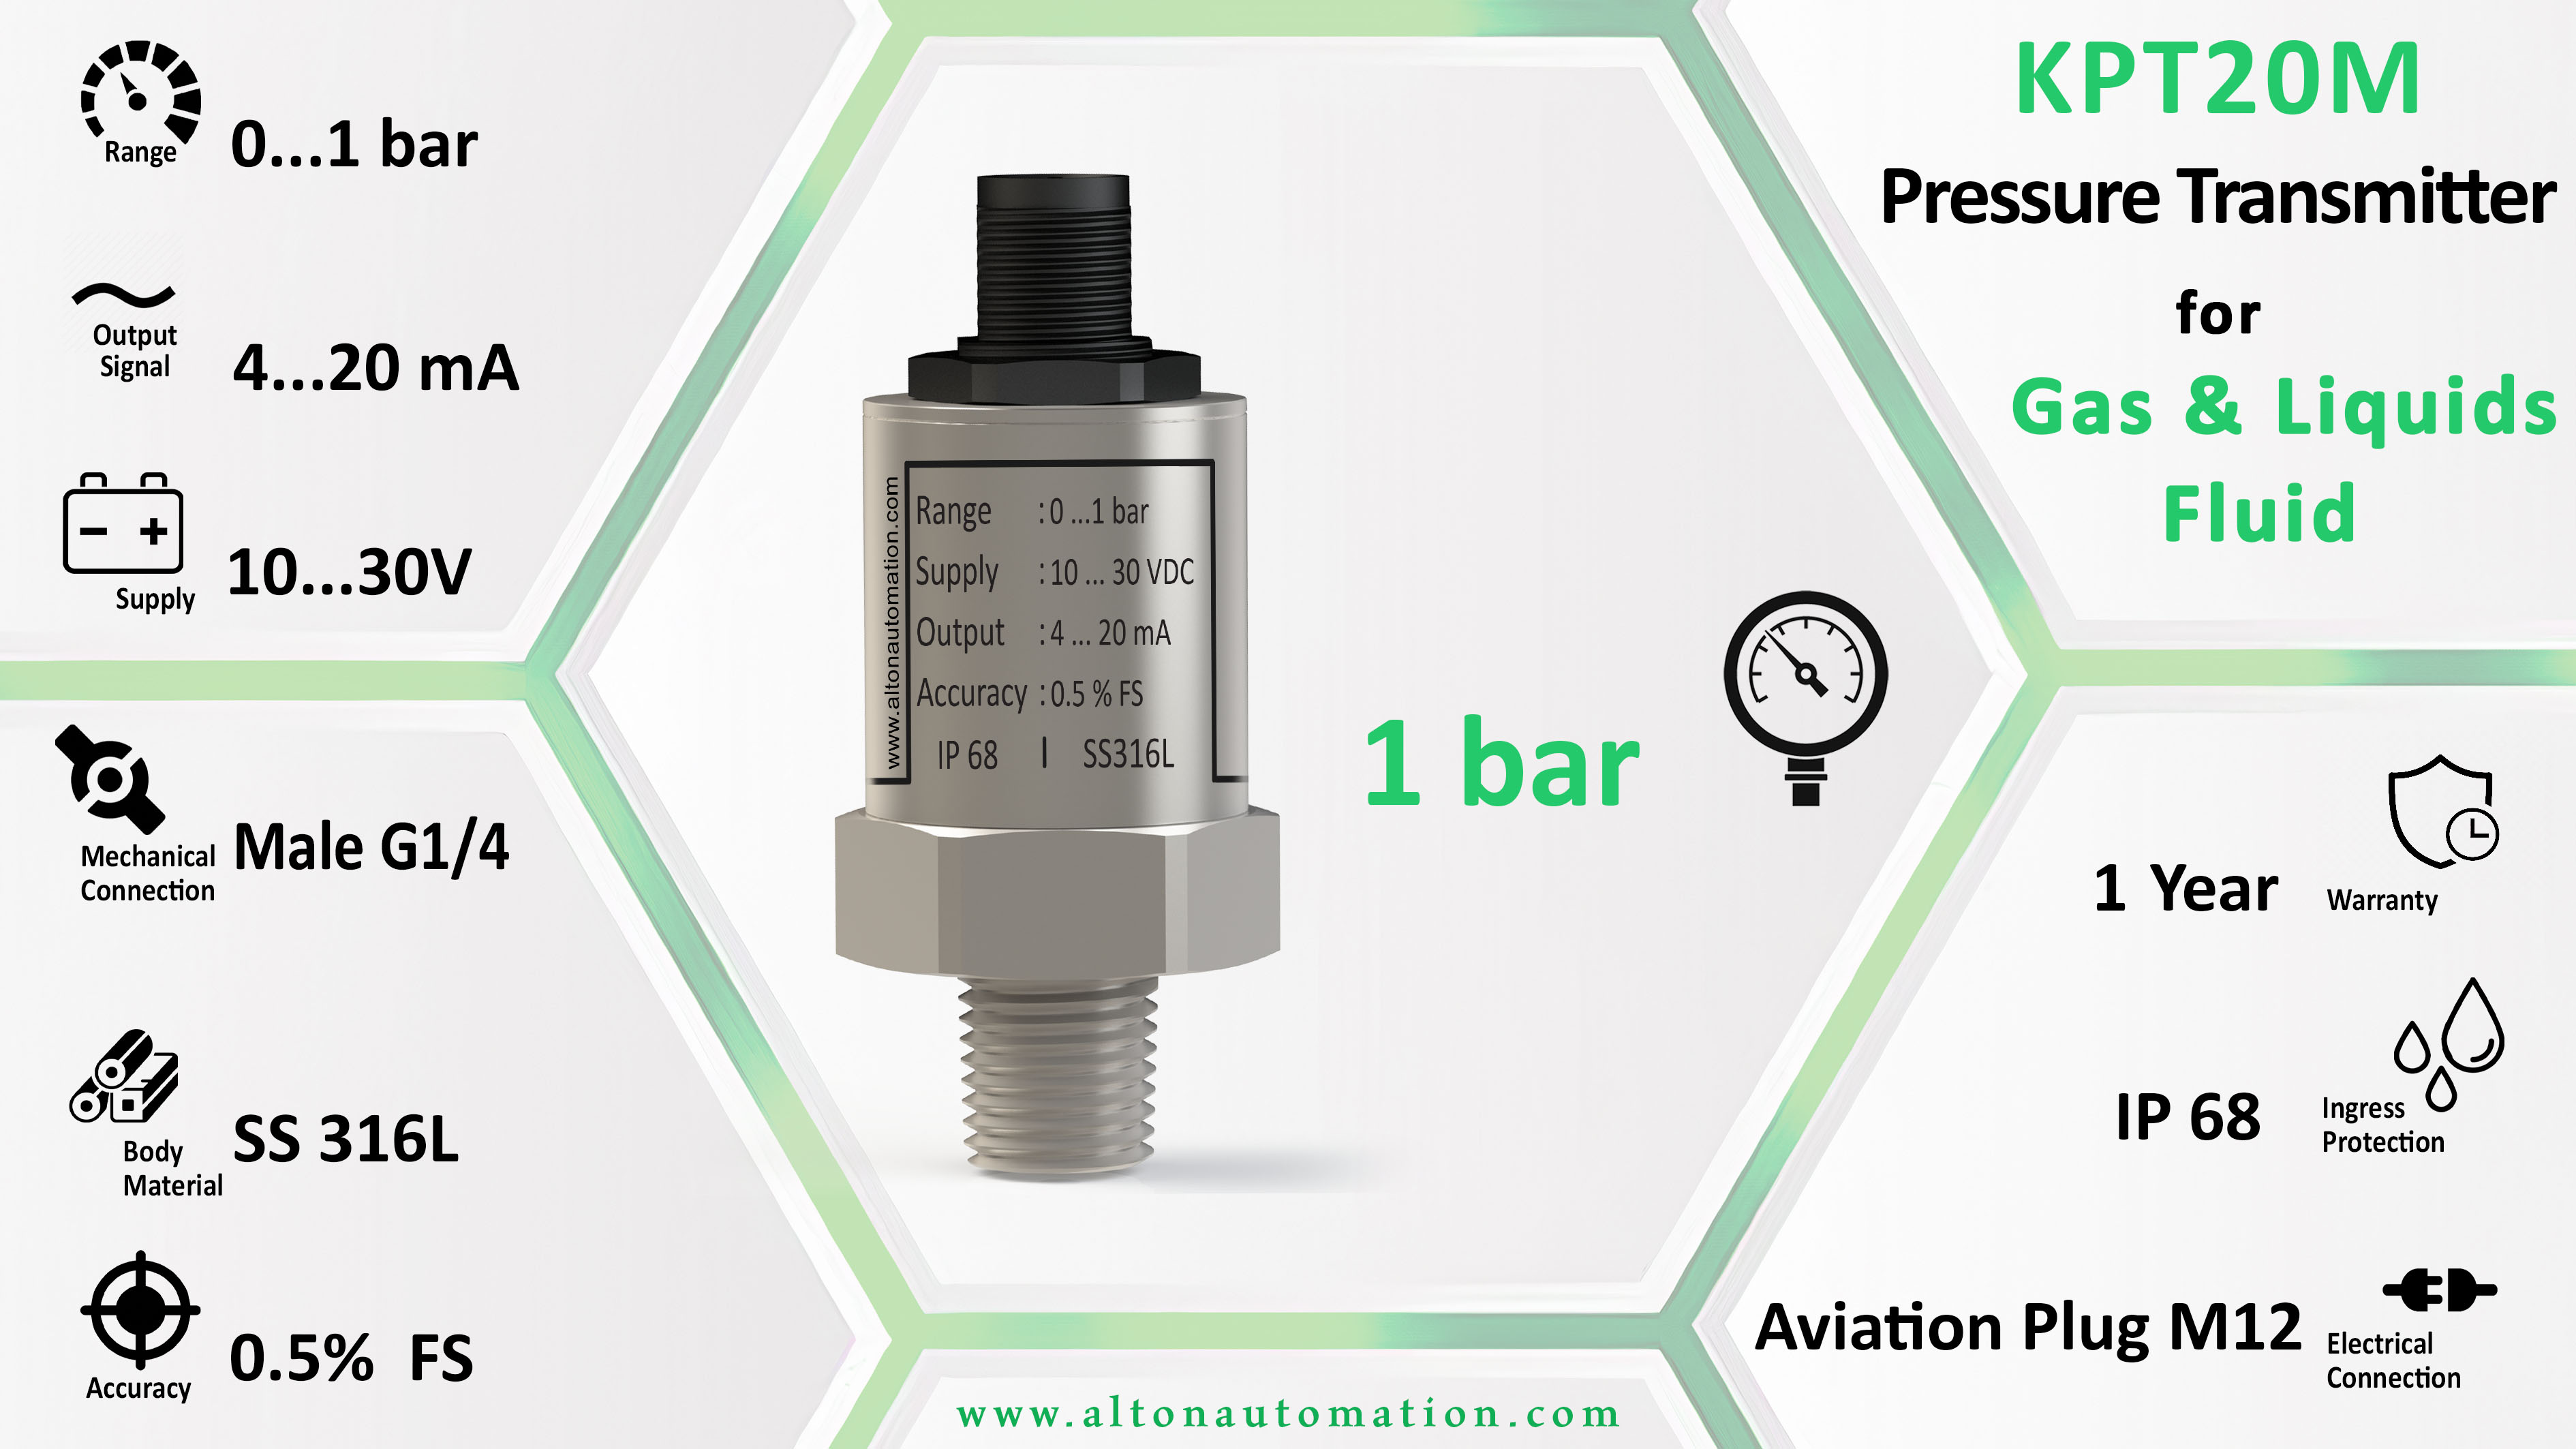 Pressure Transmitter for Gas & Liquids Fluid_KPT20M-001-C1-MG4_image_2